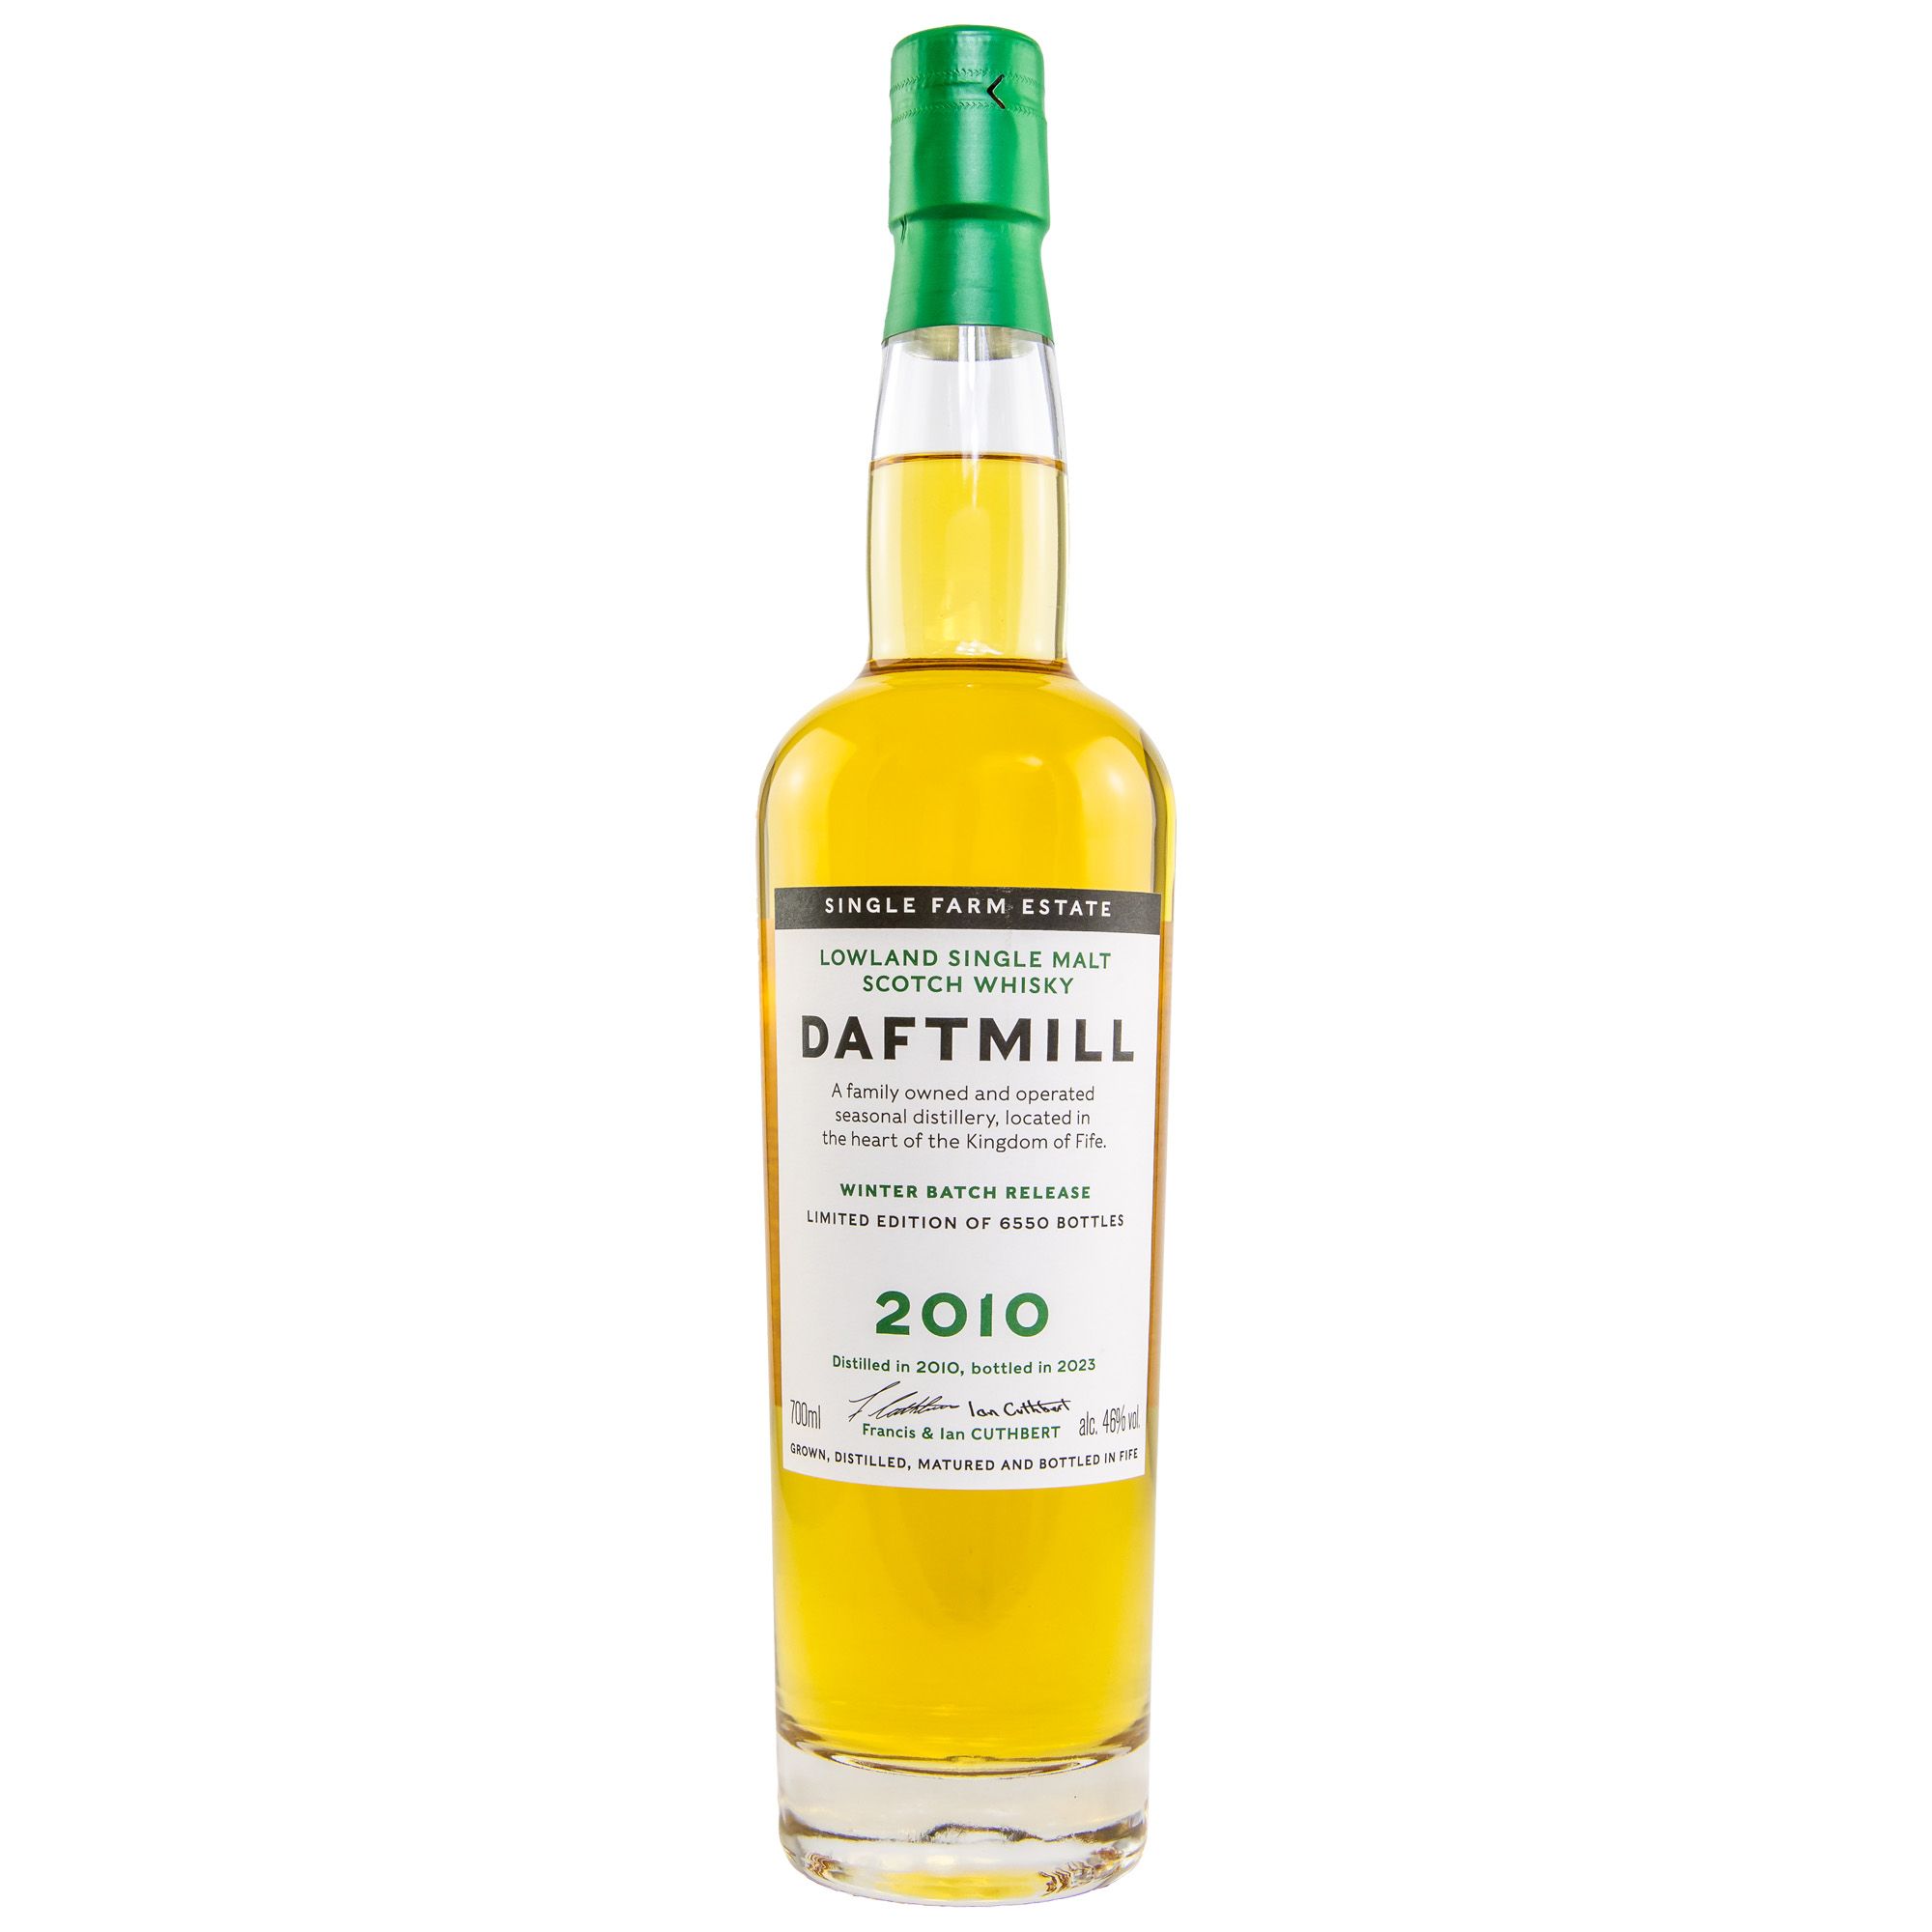 Daftmill 2010/2023 Winter Batch Release Lowland Single Malt Scotch Whisky 46% 0,7l